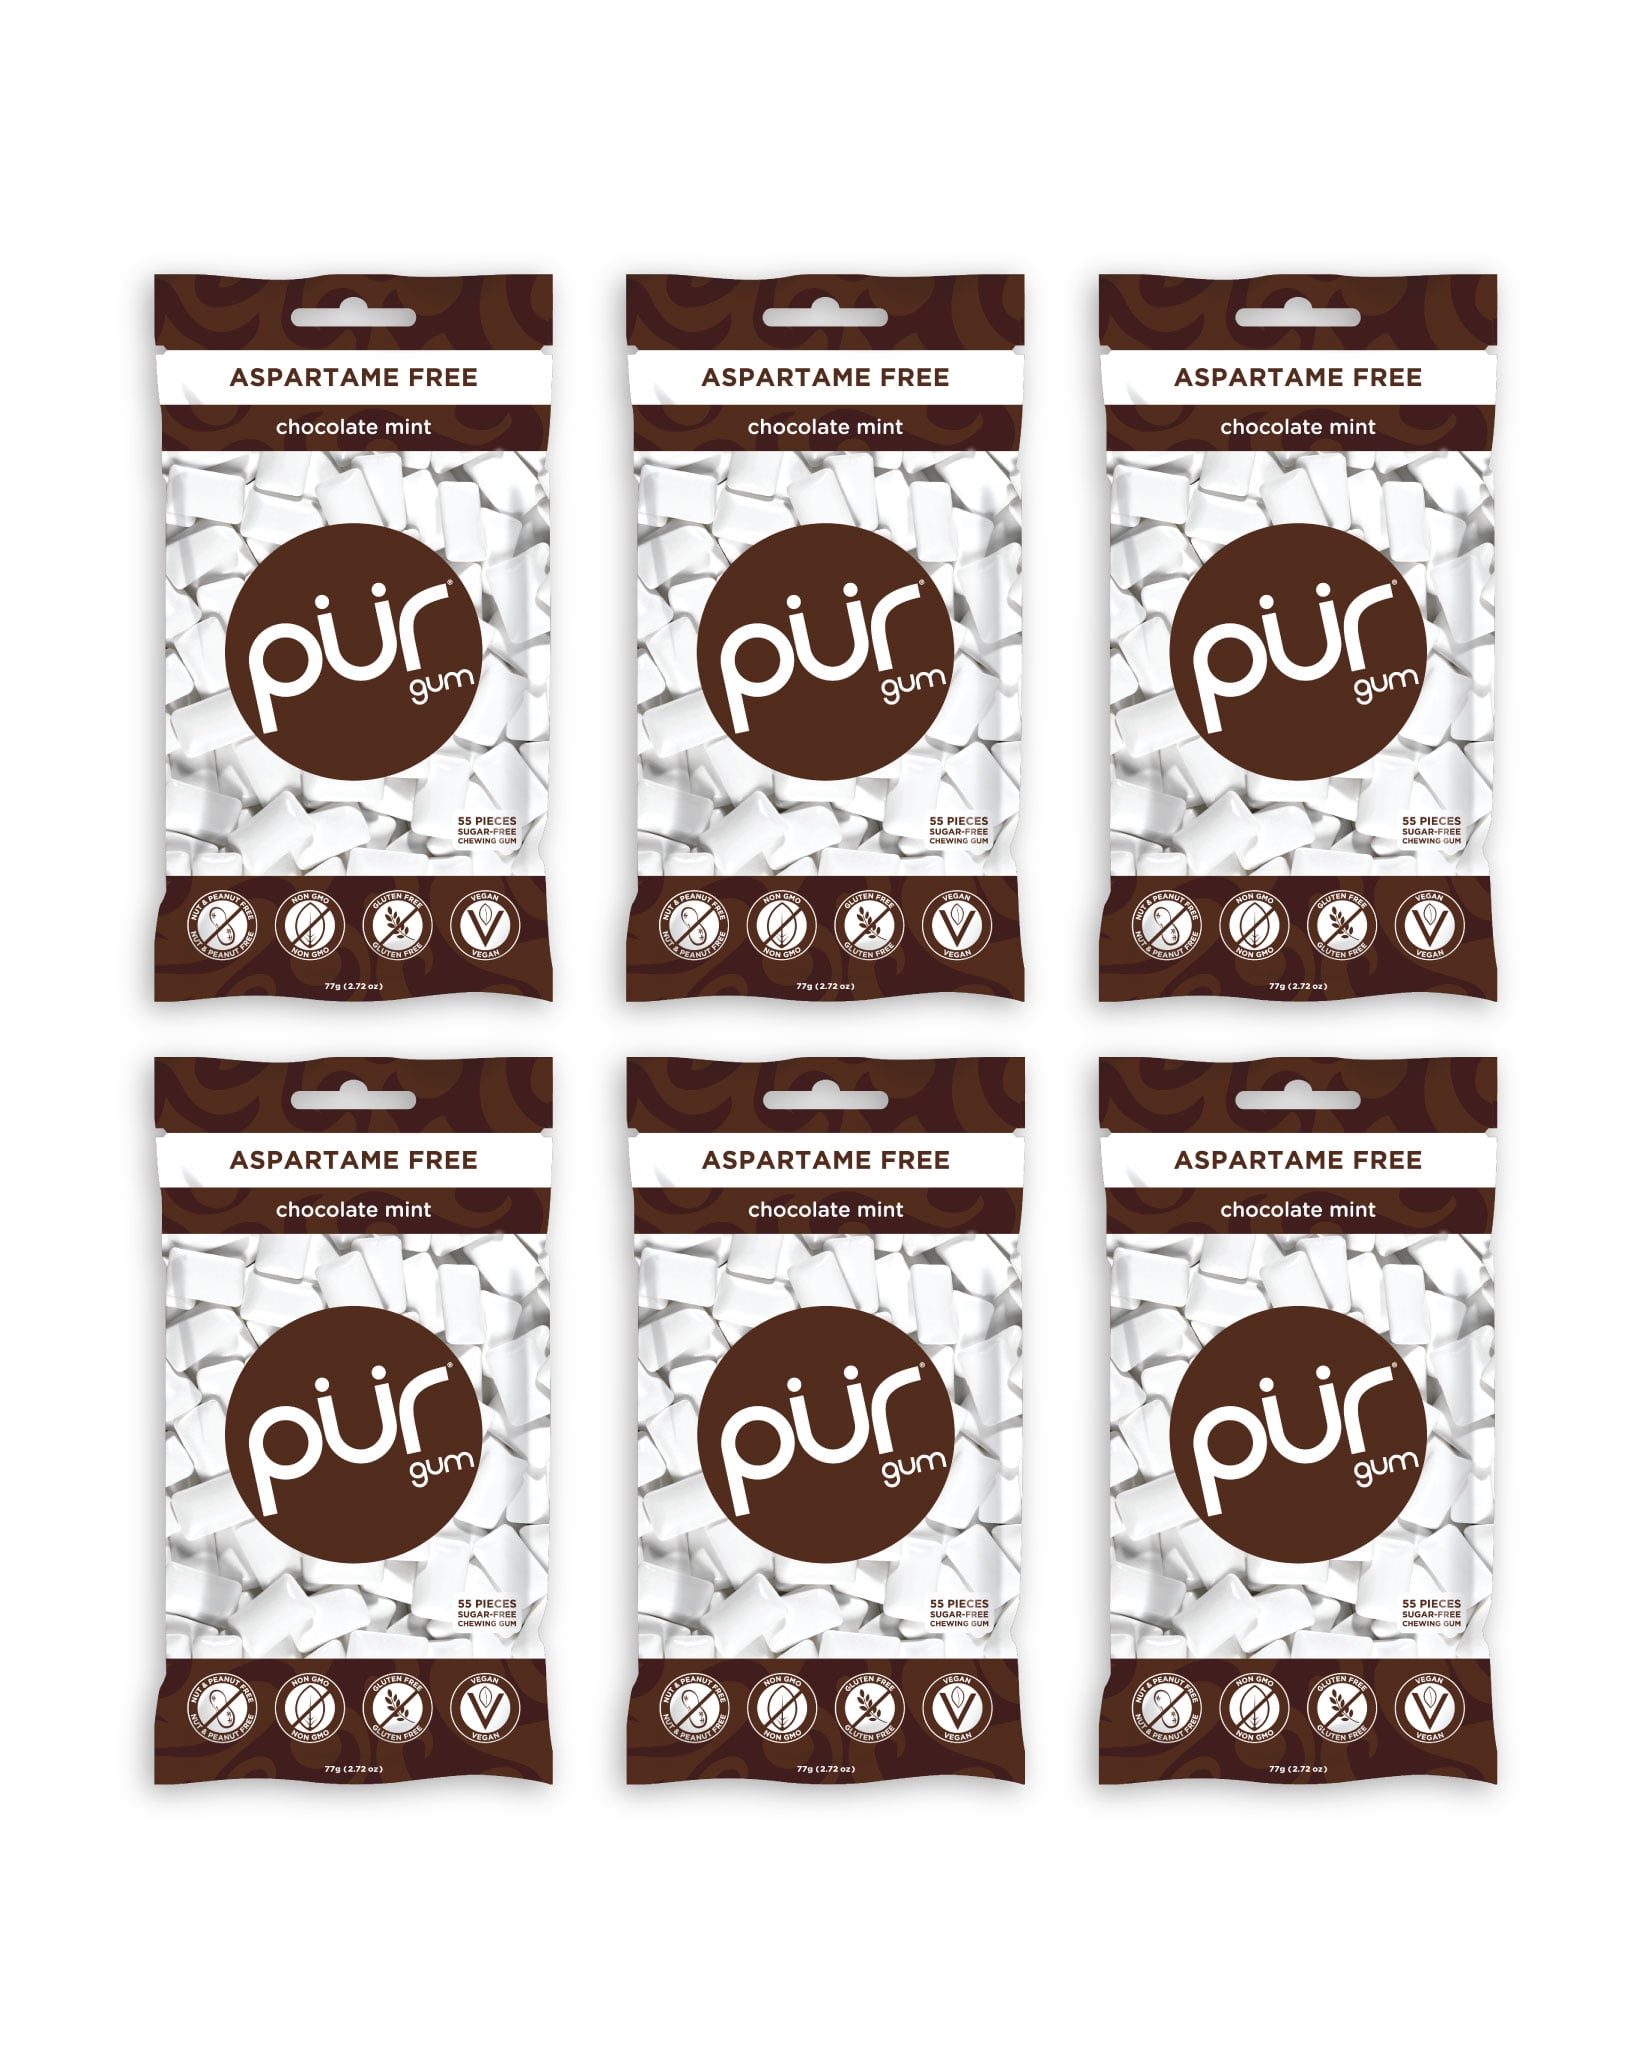 PUR Gum Aspartame Free Chewing Gum Chocolate Mint Flavored Gum 6 Pack